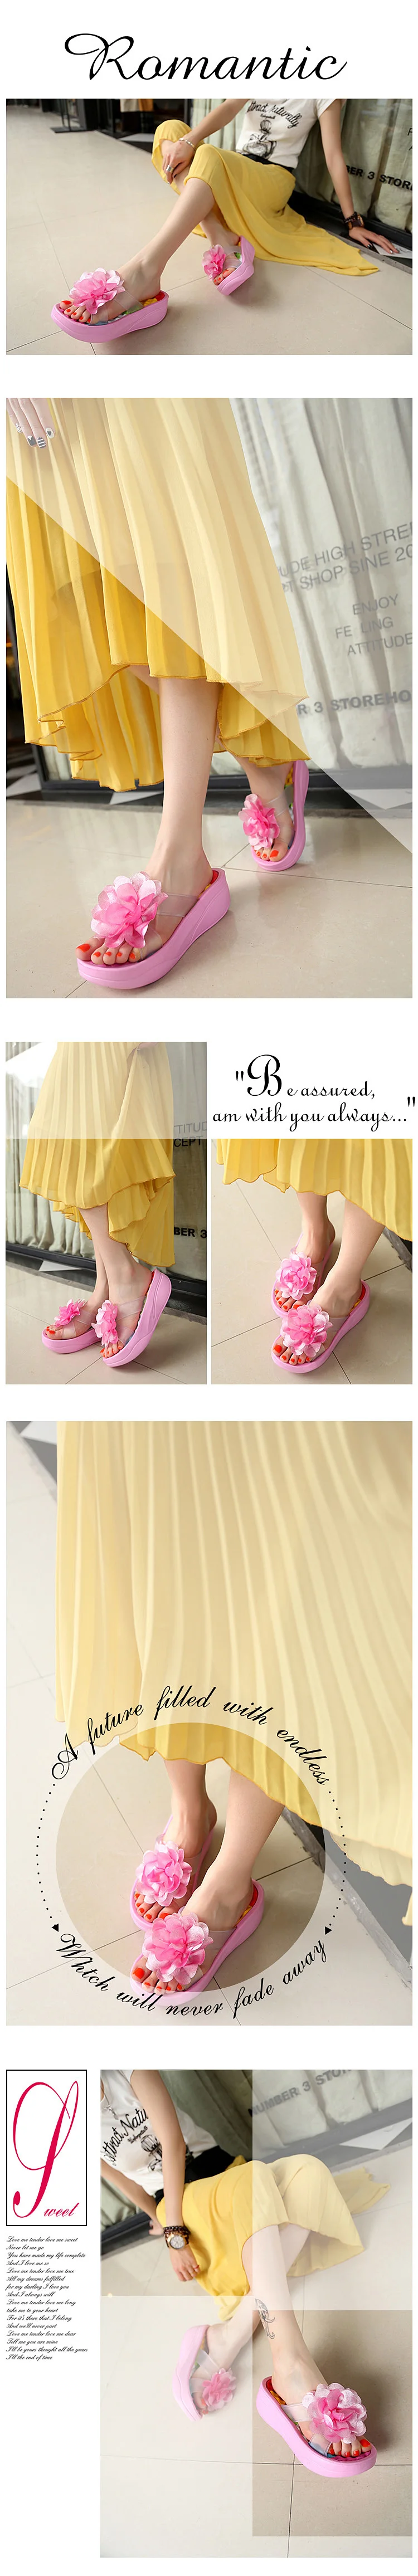 Summer Sandals Wedges Flip Flops Platform Slippers Shoes slippers sandalia New Women Sandals Fashion Flower shoes MM-92